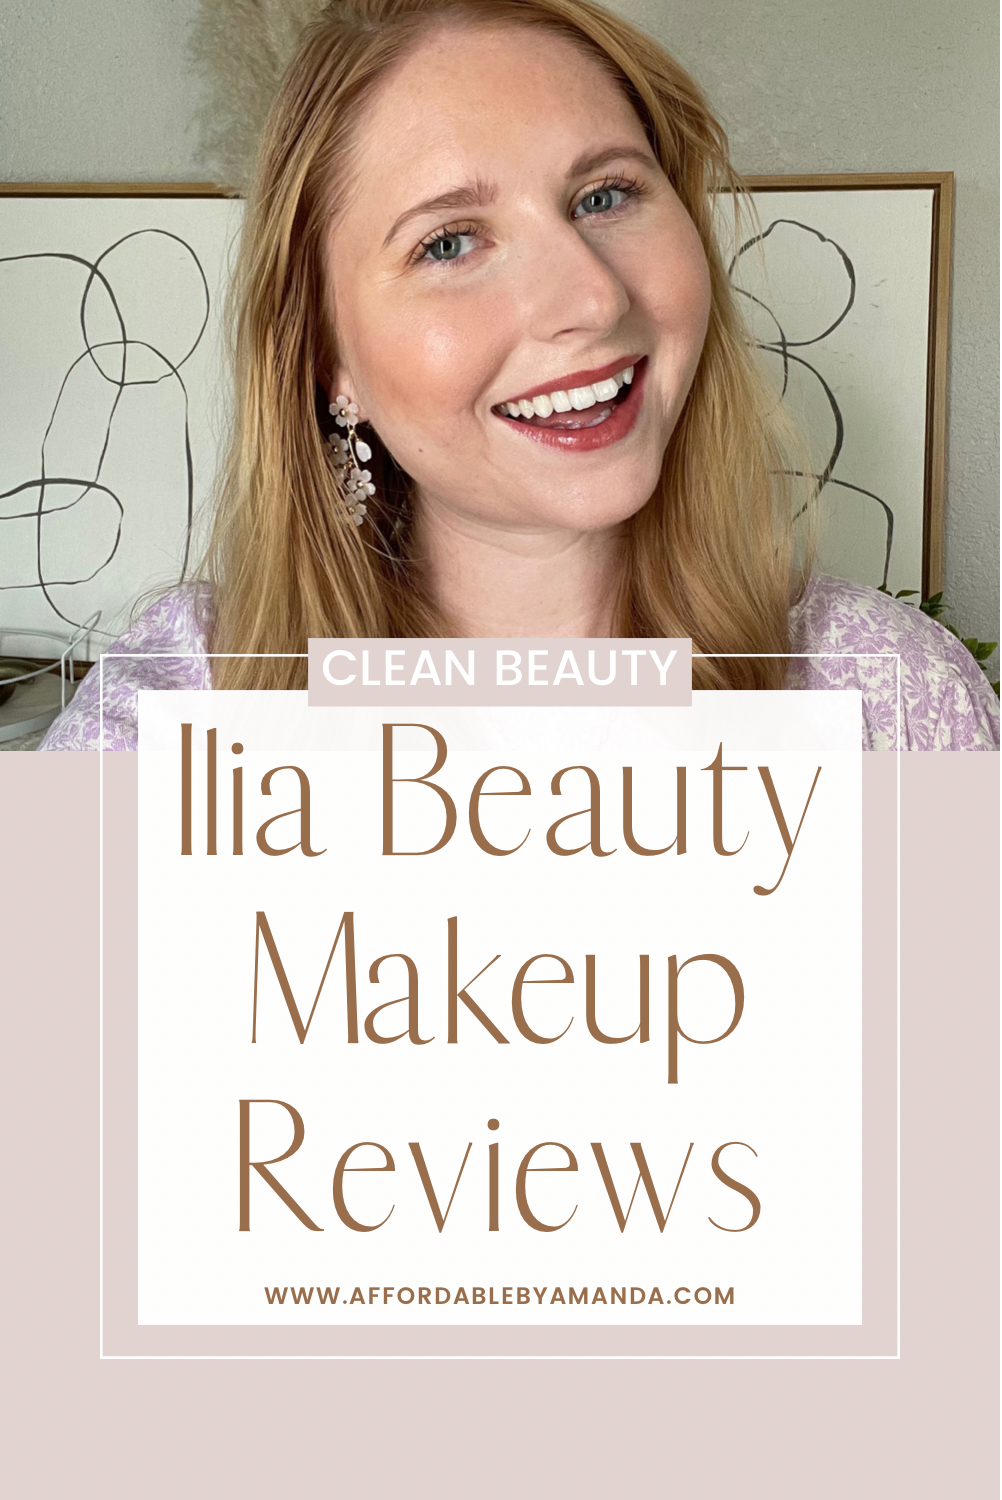 Ilia Beauty Reviews - Affordable by Amanda